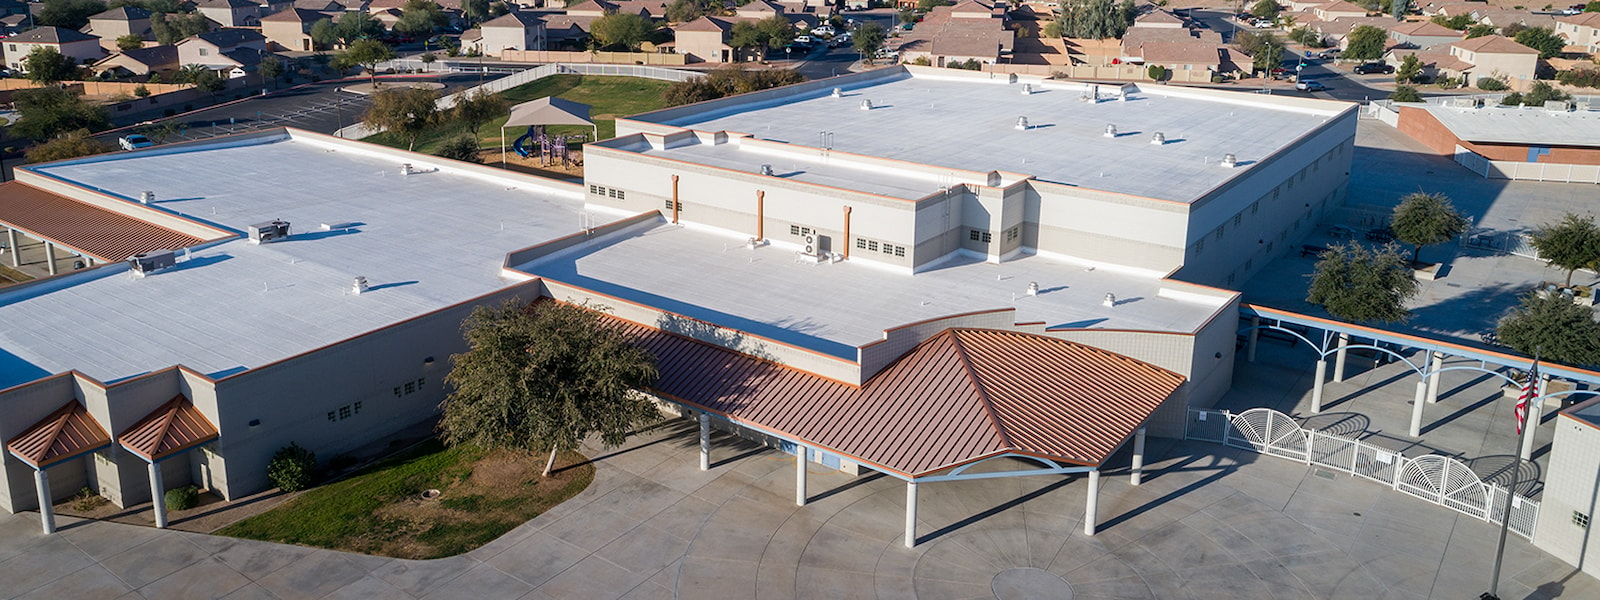 Aerial View of El Mirage Elementary